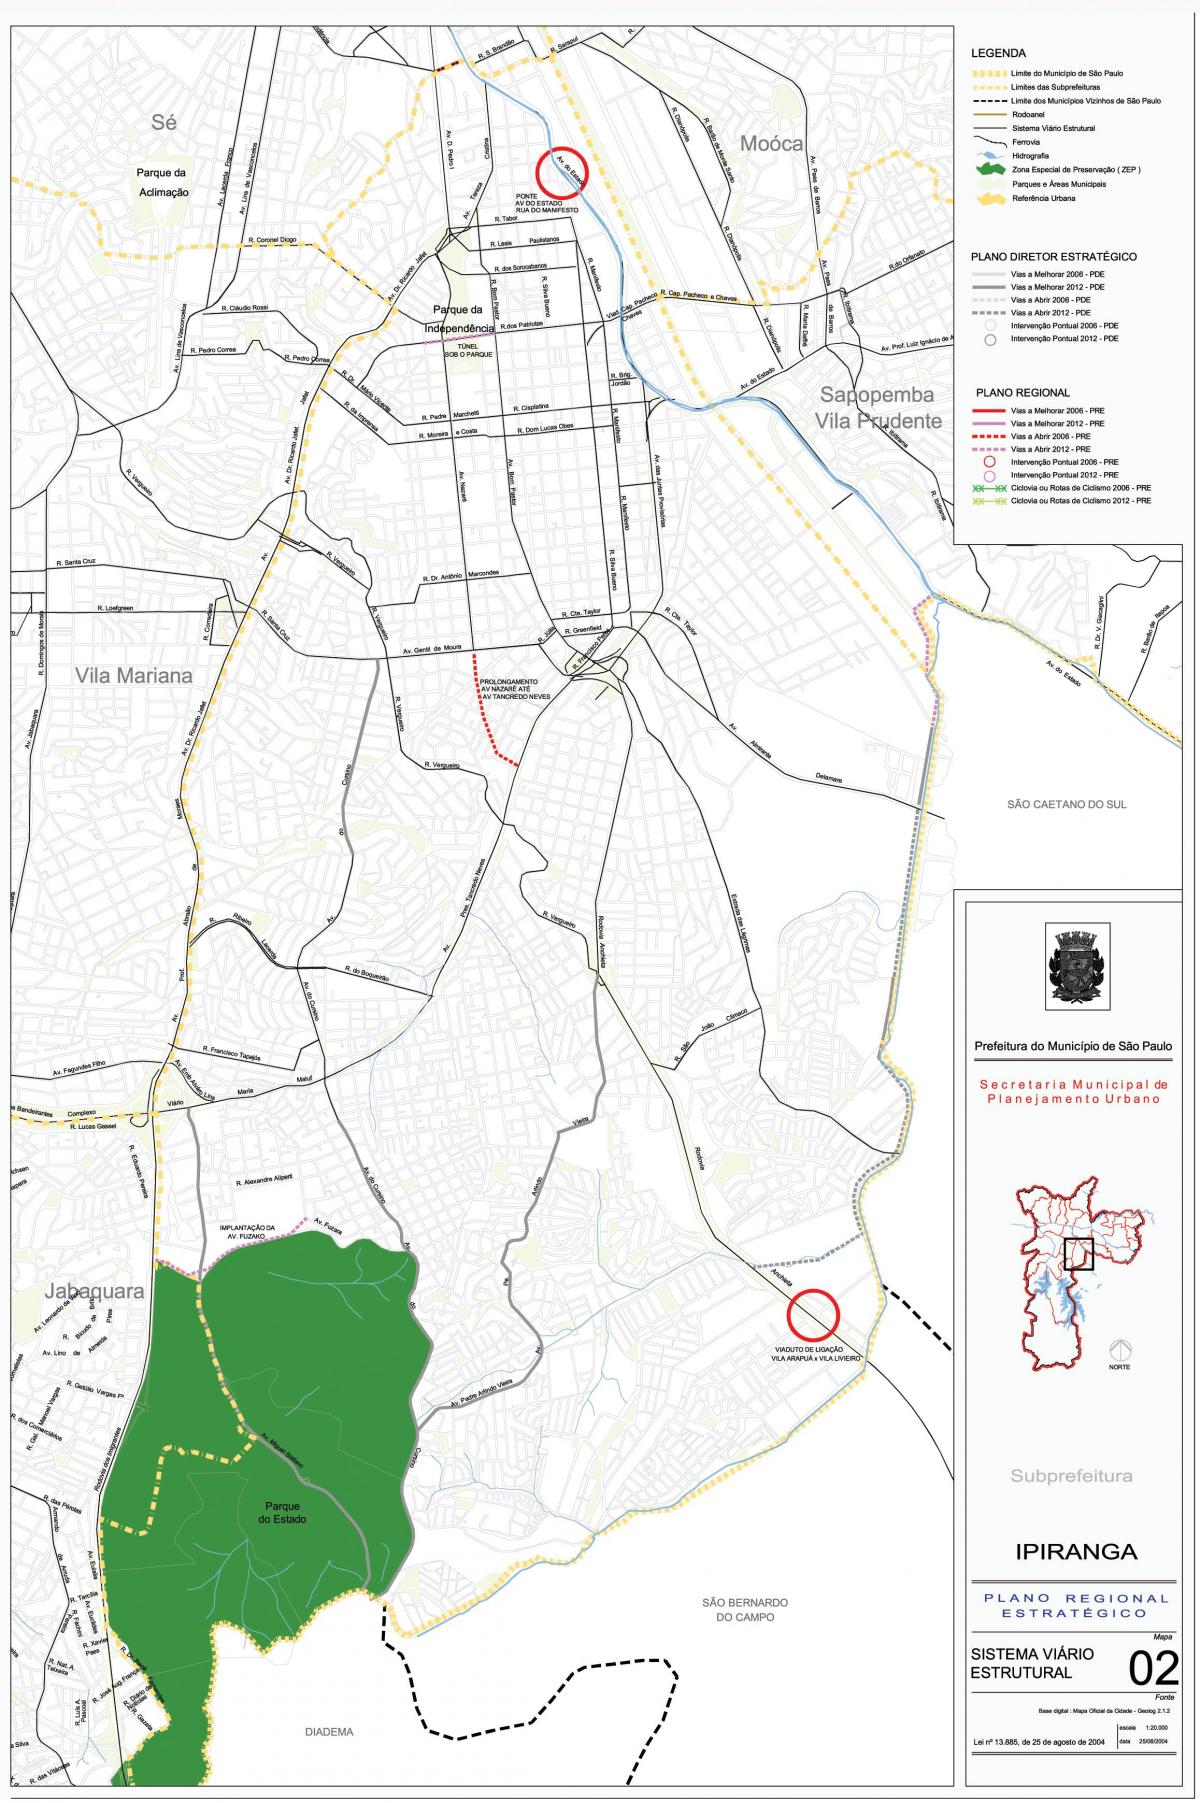 Mapa do Ipiranga, São Paulo - Estradas